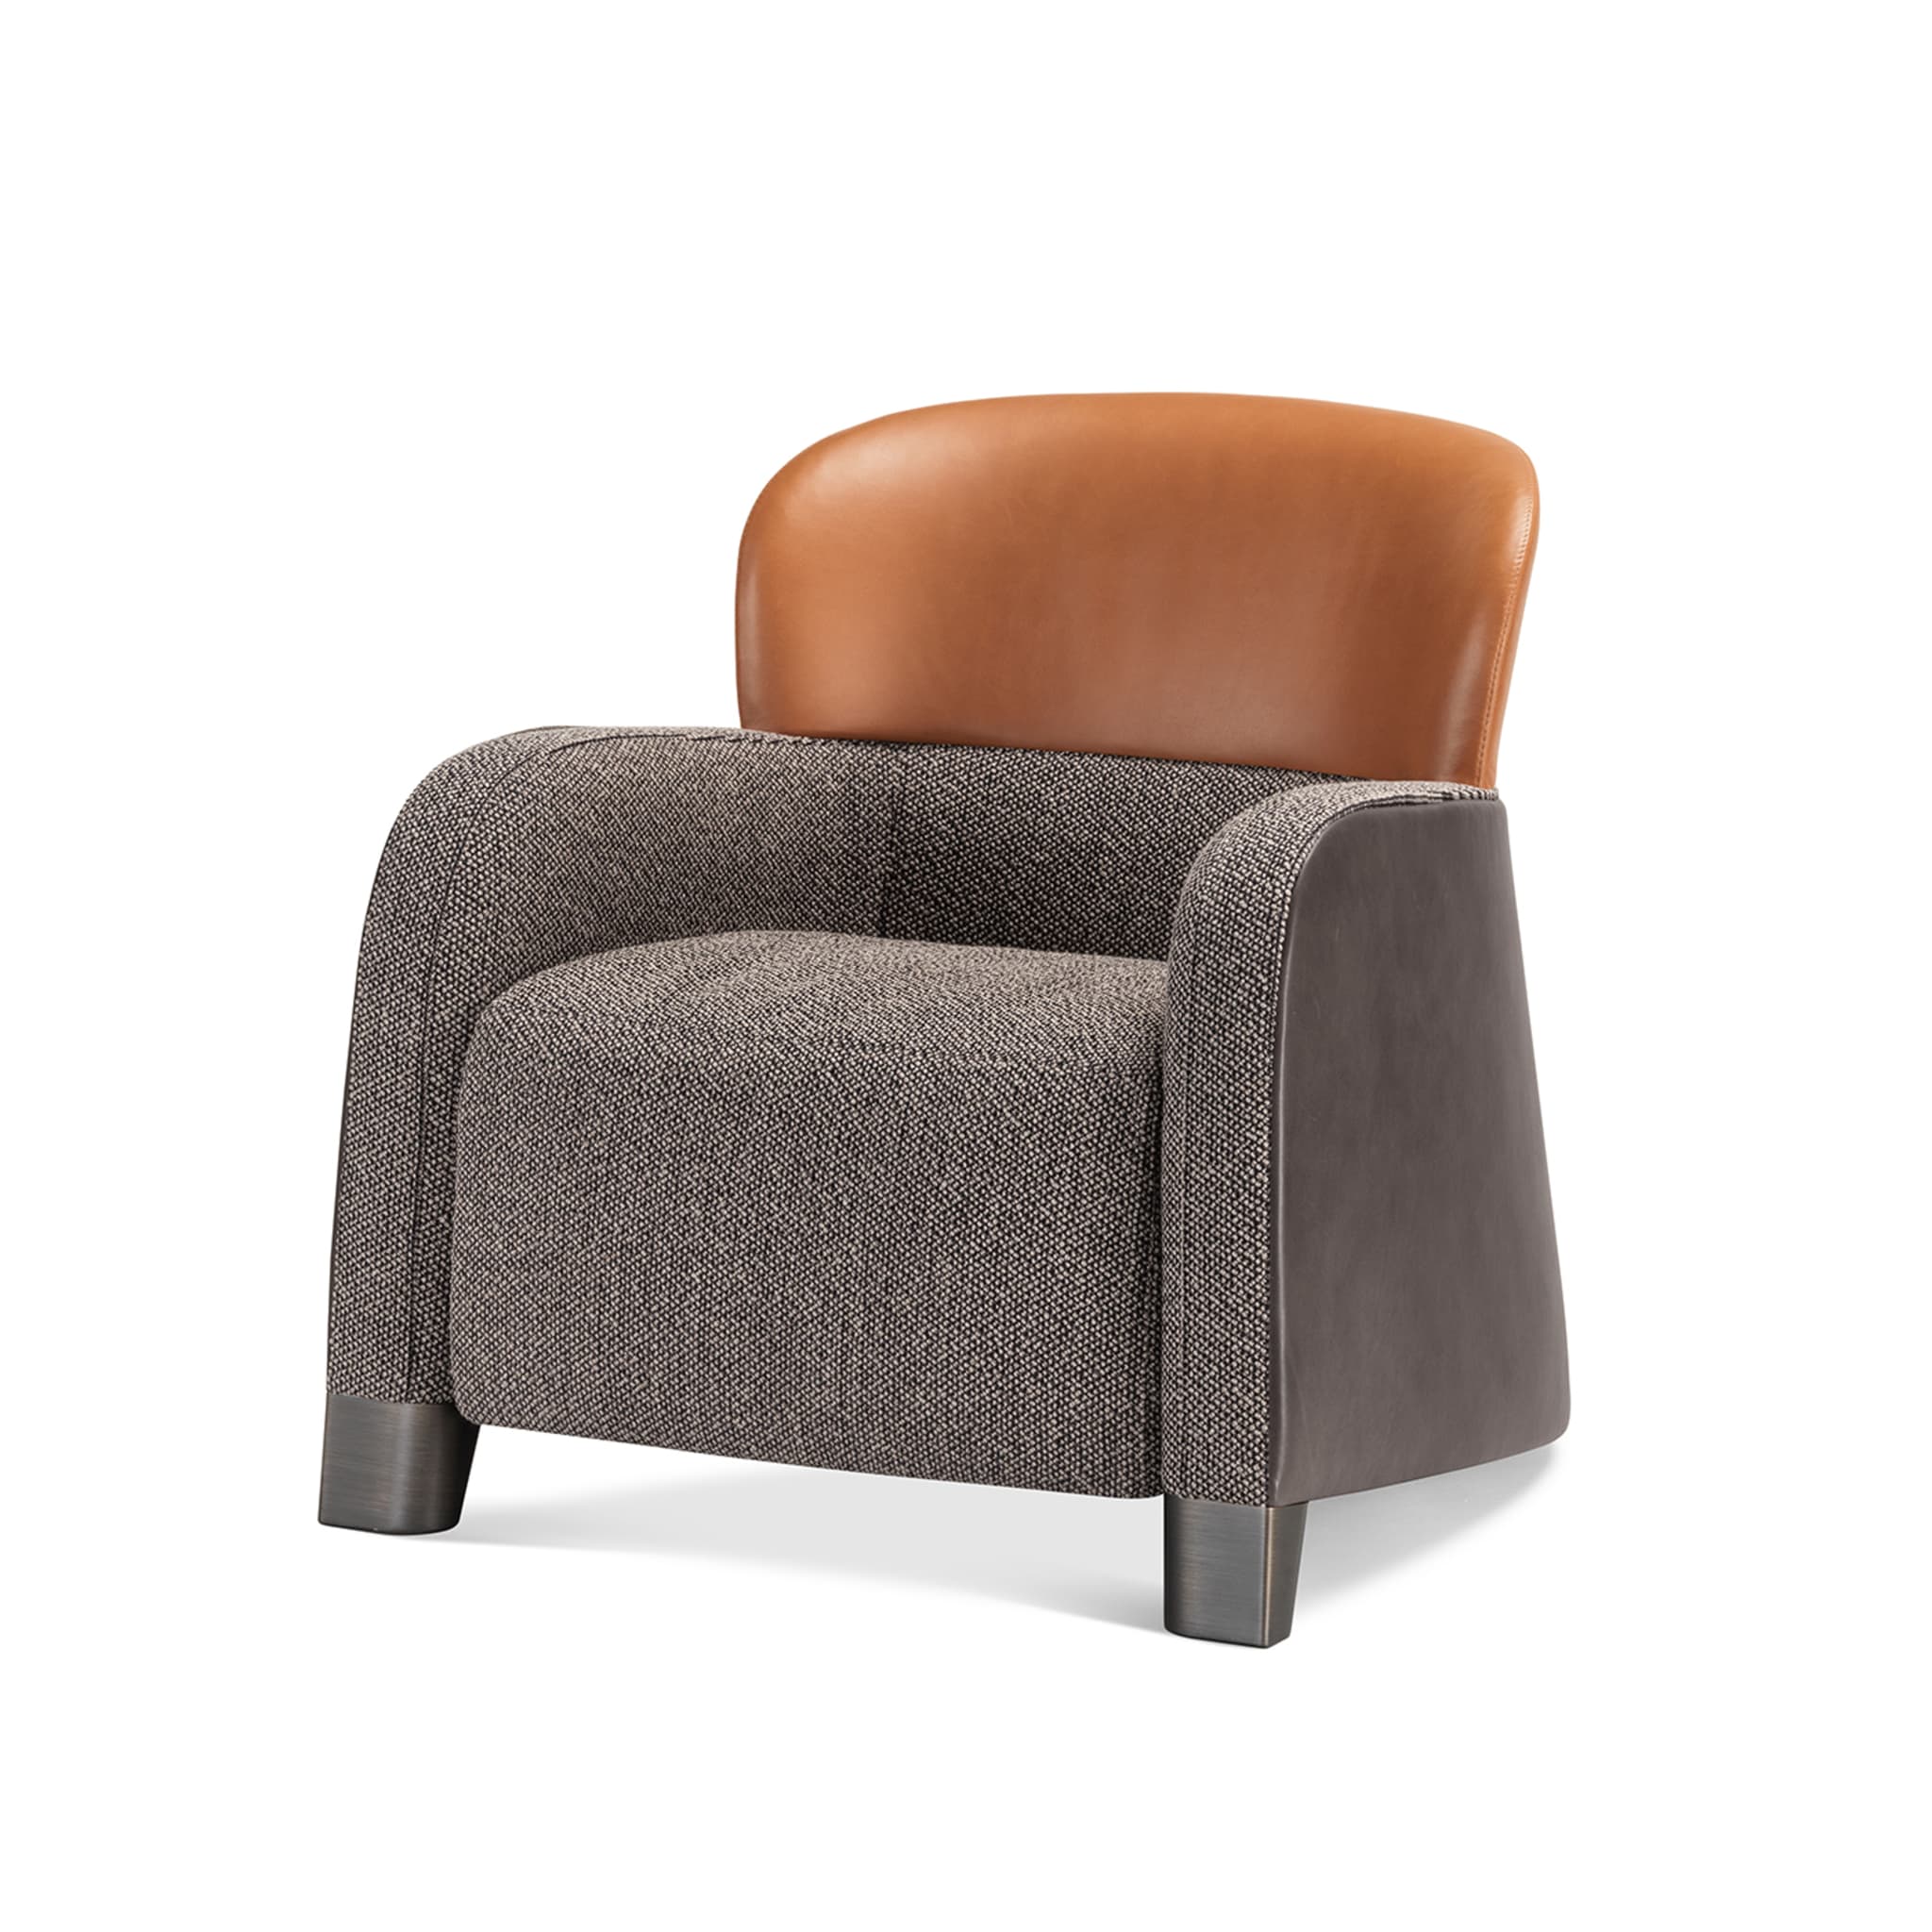 Bucket Brown/Gray Armchair with Low Headrest - Alternative view 1